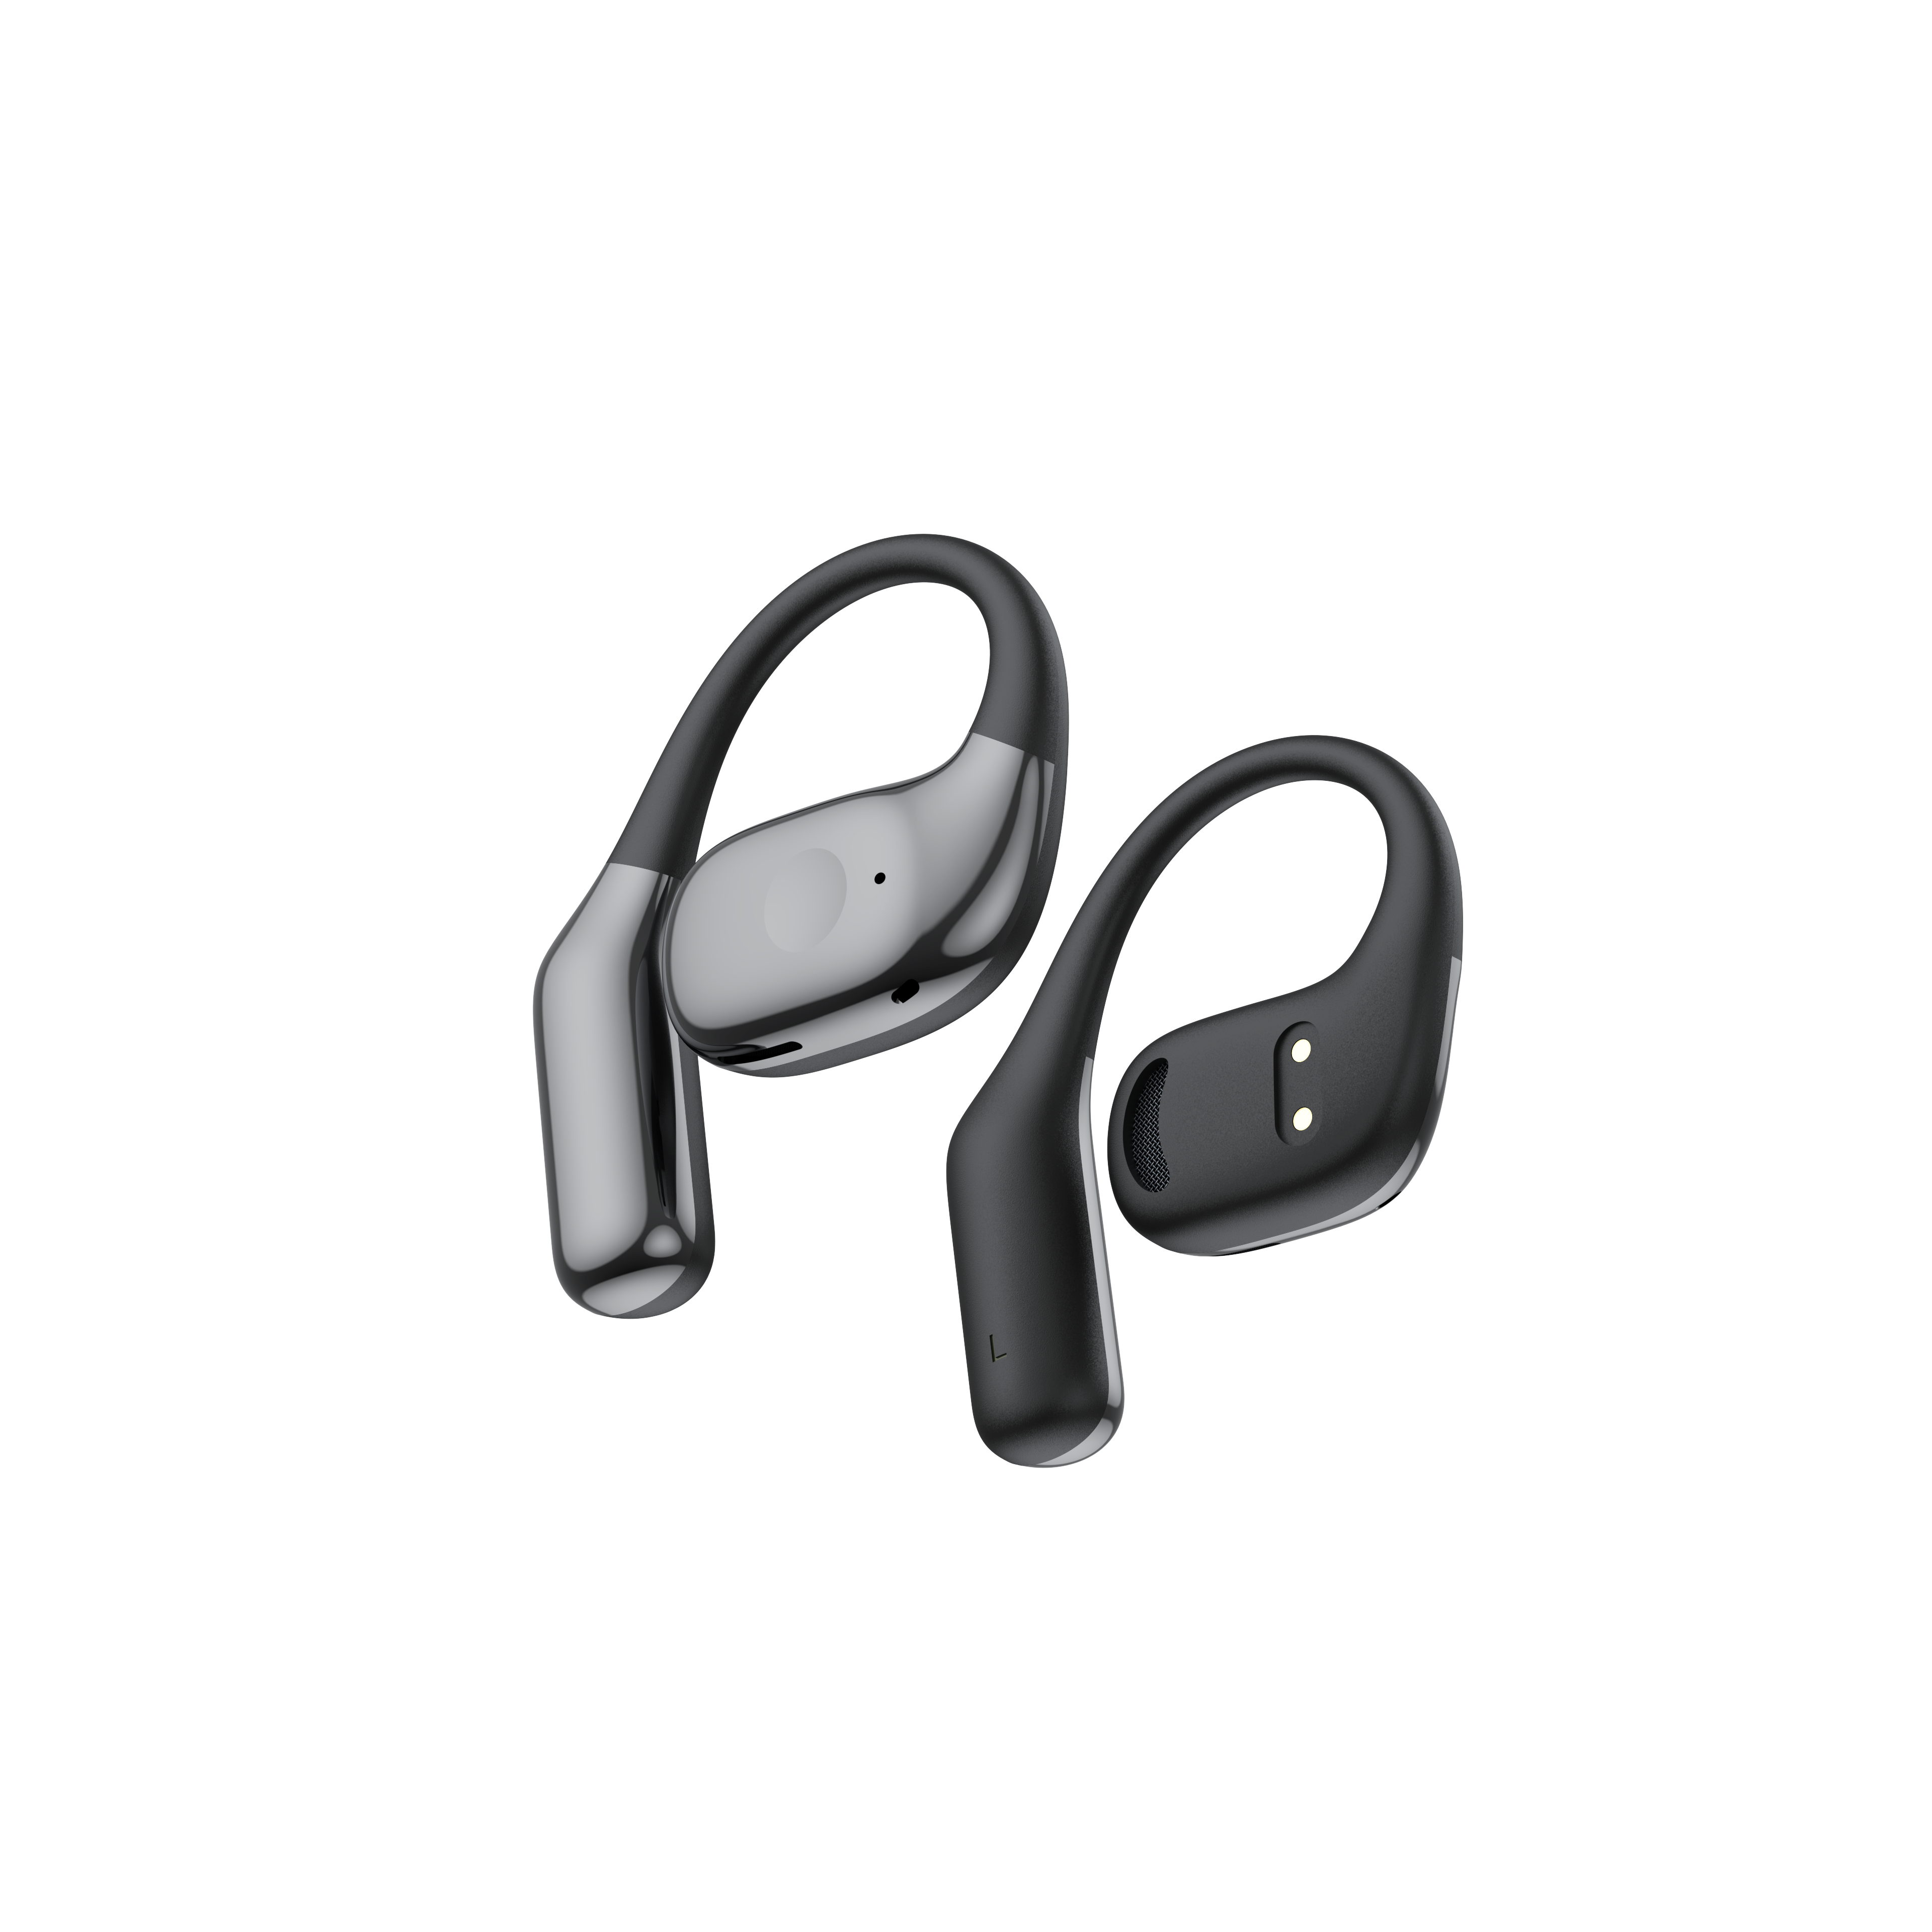 HappyAudio; Byz; pabrik TWS; pabrik earphone; pabrik headphone; Earbud TWS, Layanan Manufaktur Elektronik China; Pabrik Earphone Bluetooth